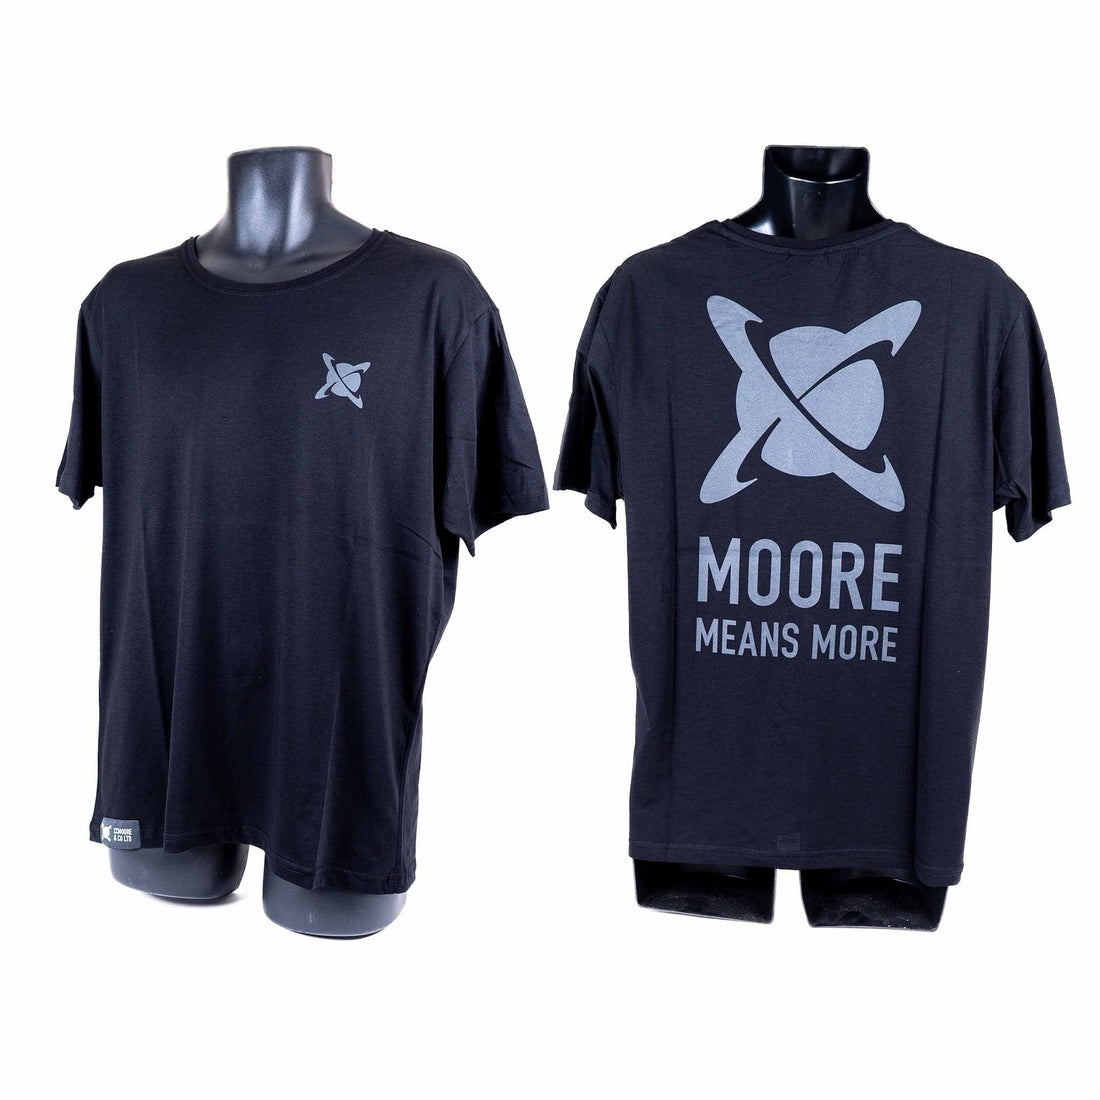 CC Moore Black T-Shirt Medium